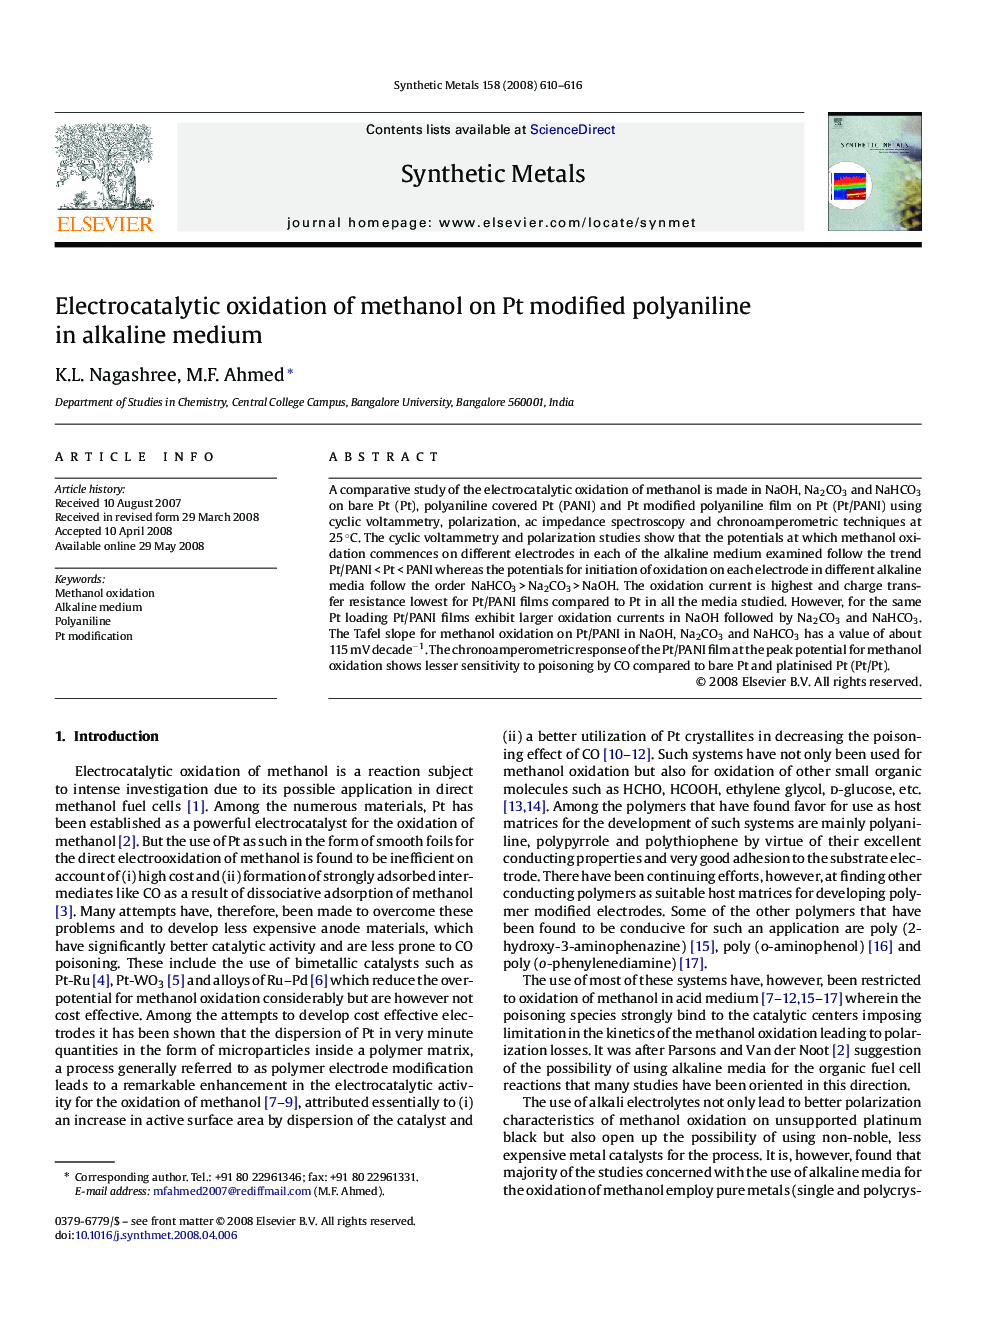 Electrocatalytic oxidation of methanol on Pt modified polyaniline in alkaline medium